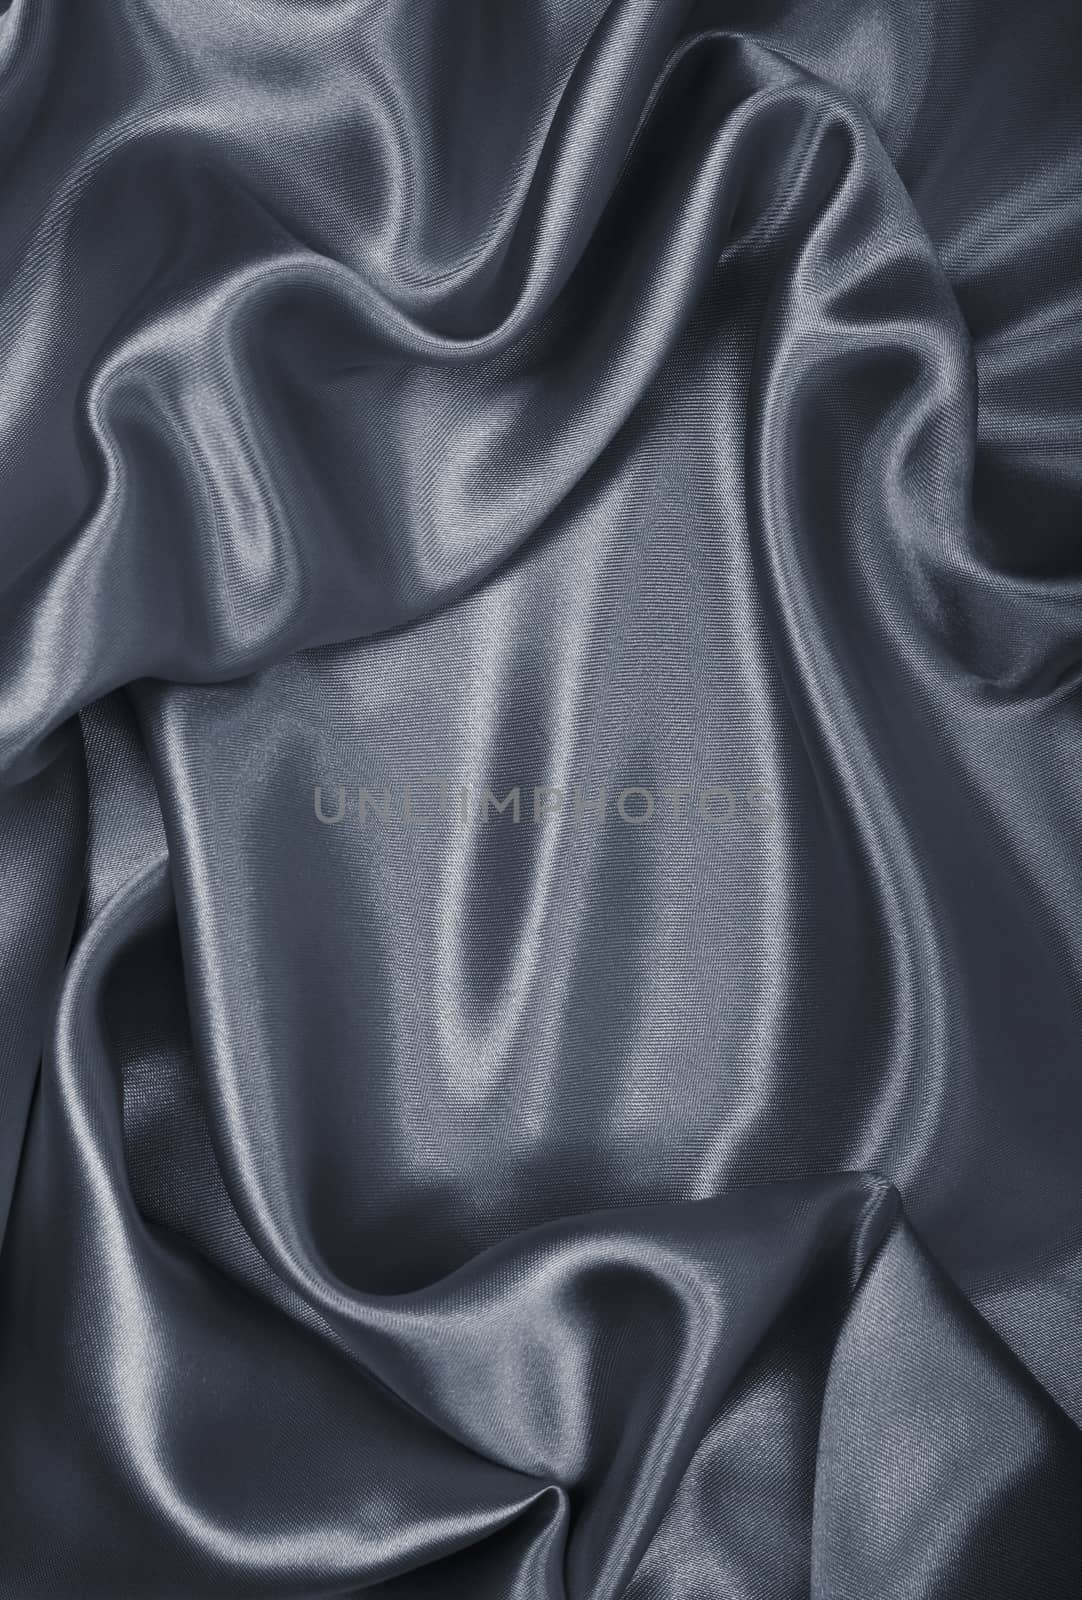 Smooth elegant grey silk as background  by oxanatravel